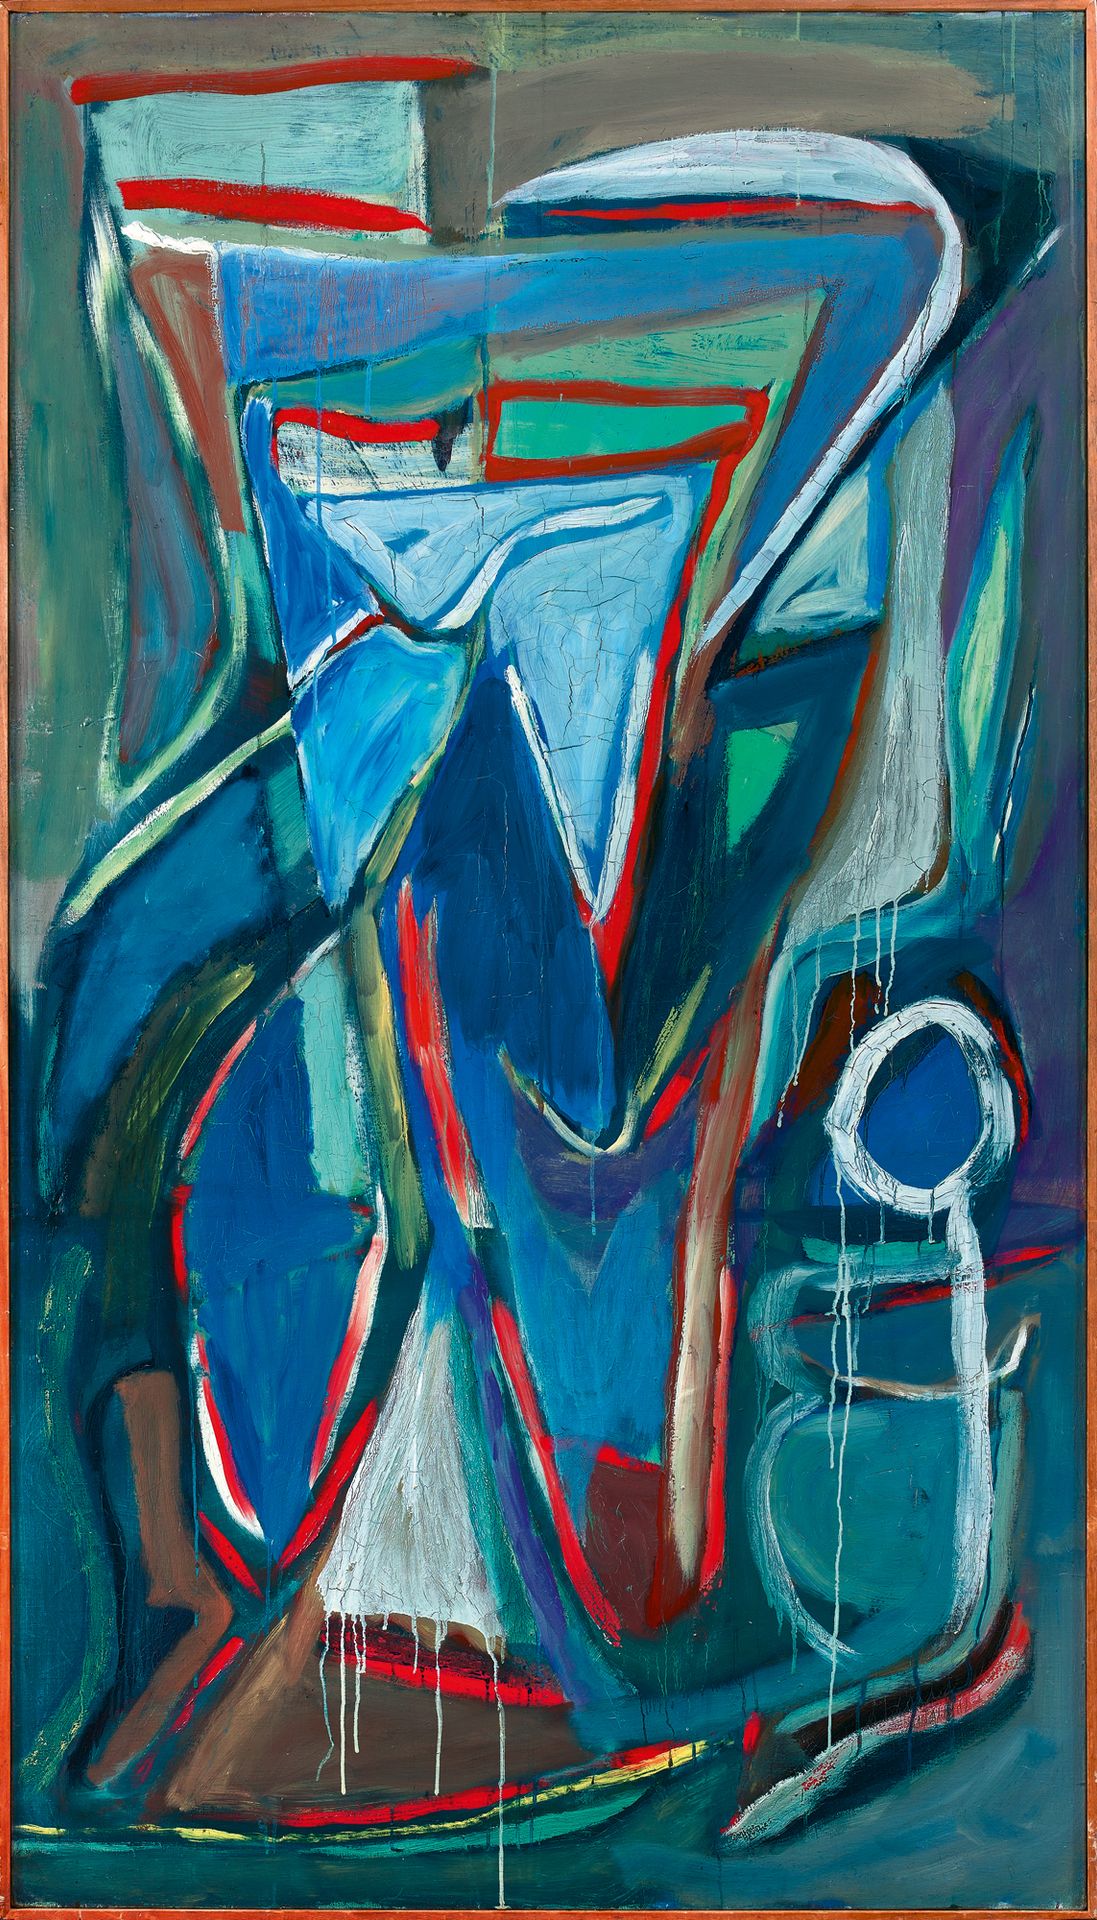 Null 布拉姆-范-维尔德(1895-1981)

无题。巴黎，大奥古斯丁街，1960年

布面油画

183 x 103 cm



出处 :

- 艺术家&hellip;